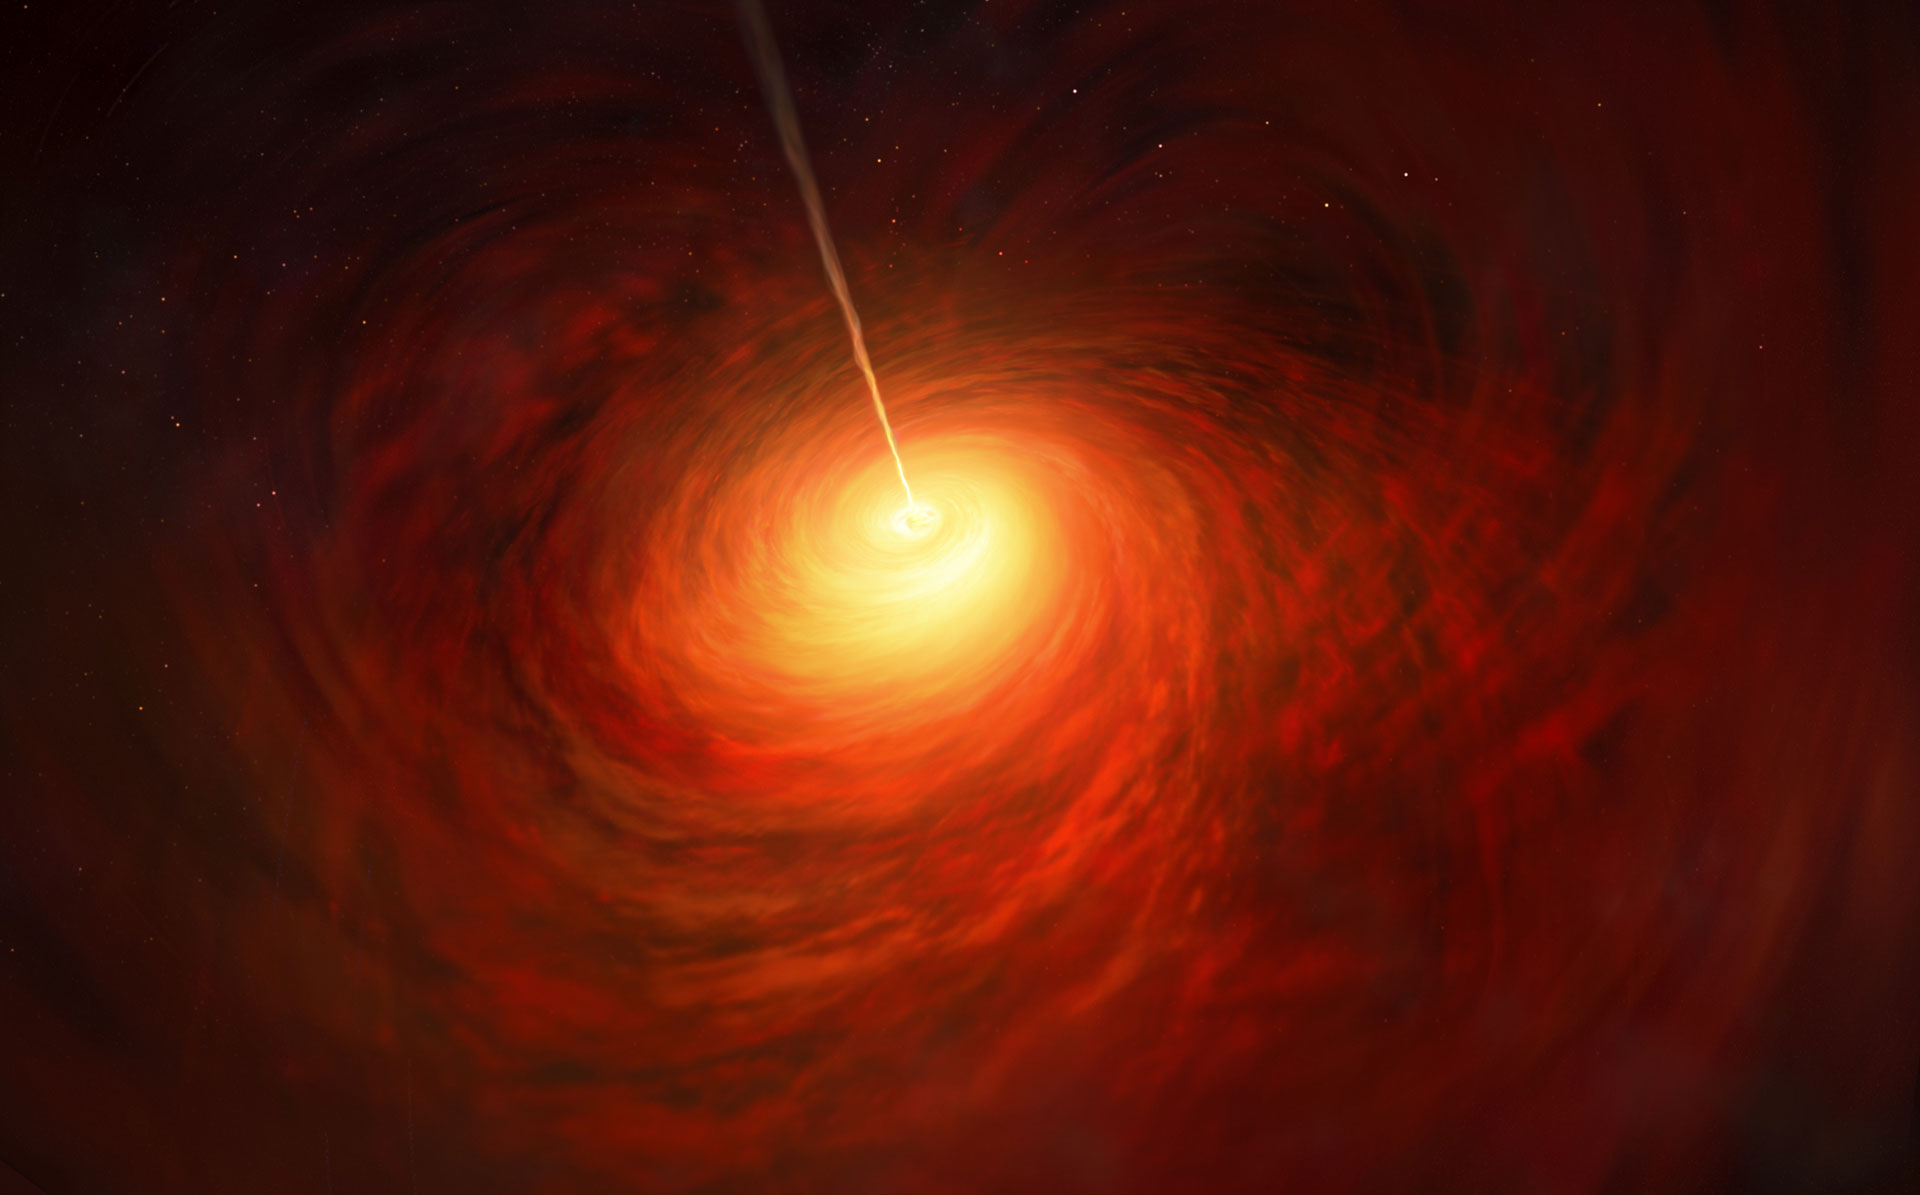 black hole event horizon